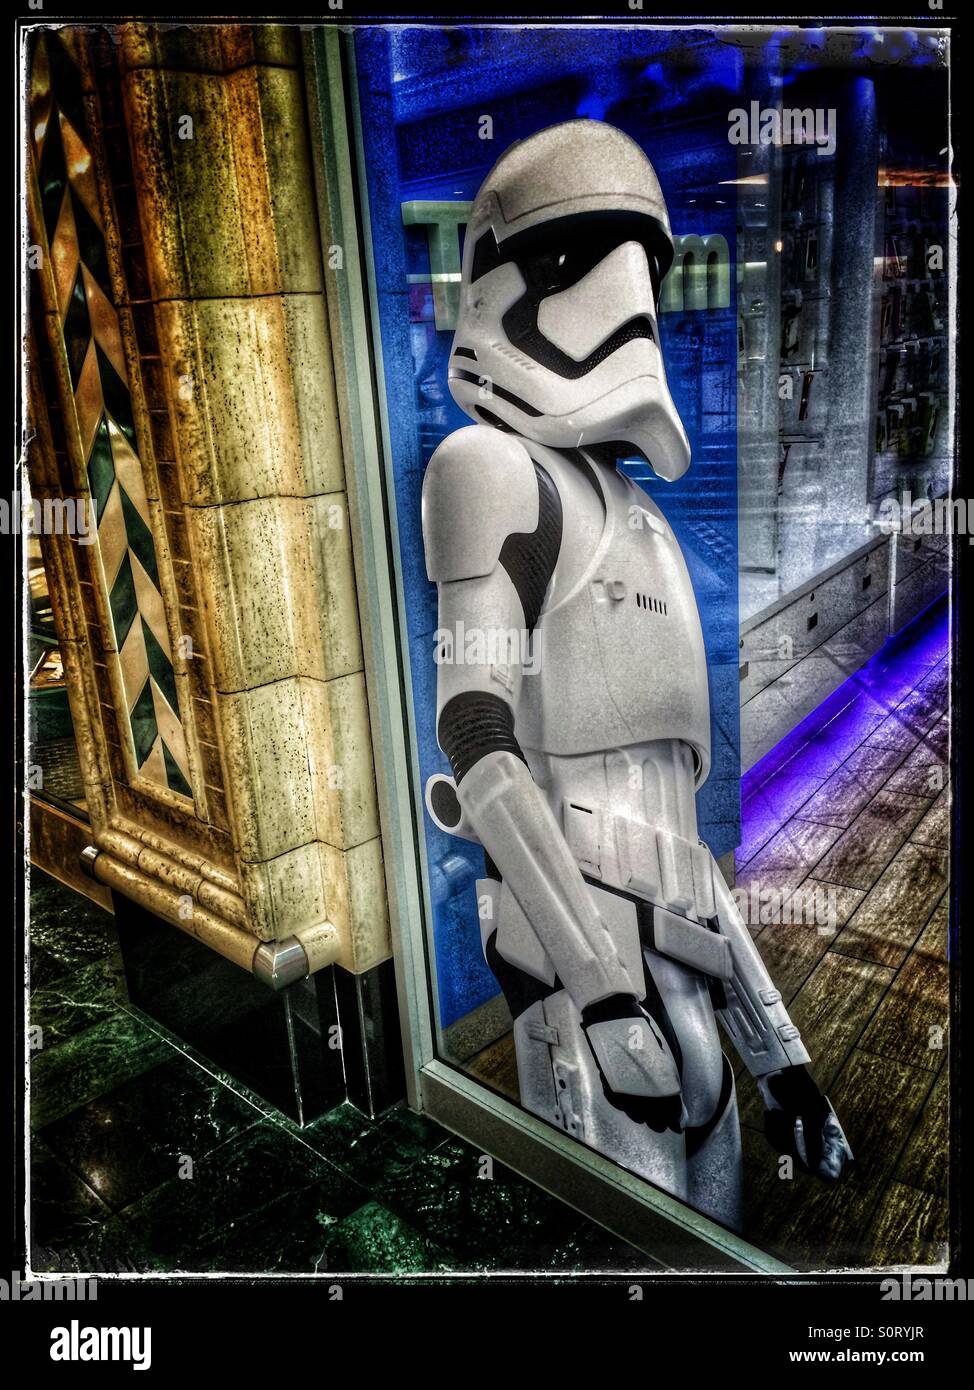 Storm trooper poster in shop window. Stock Photo